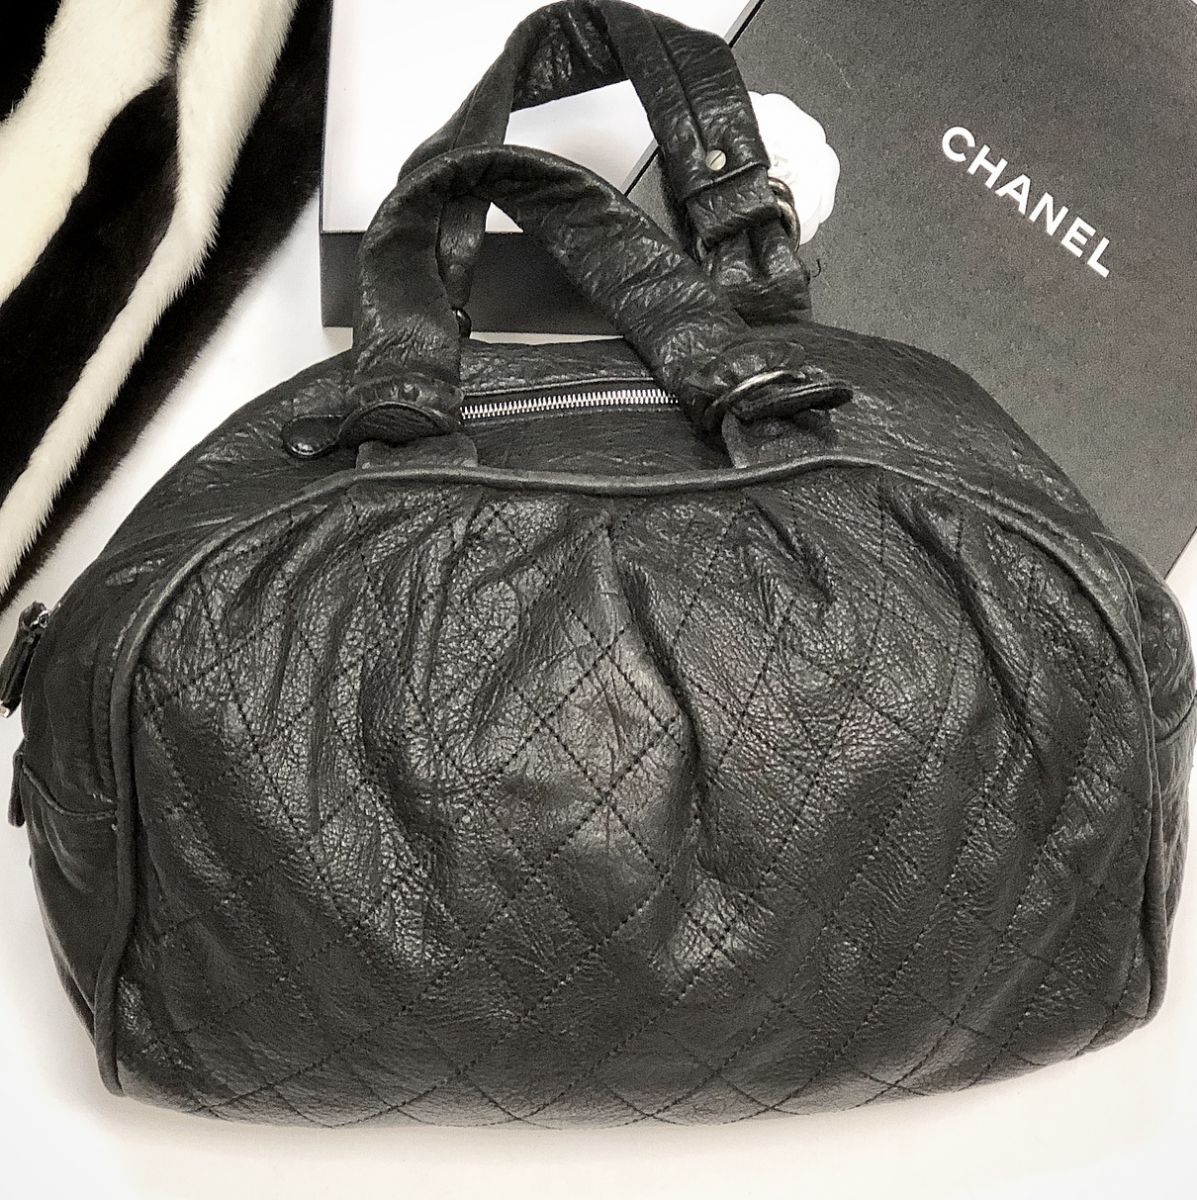 Сумка Chanel  размер 45/25 цена 46 155 руб